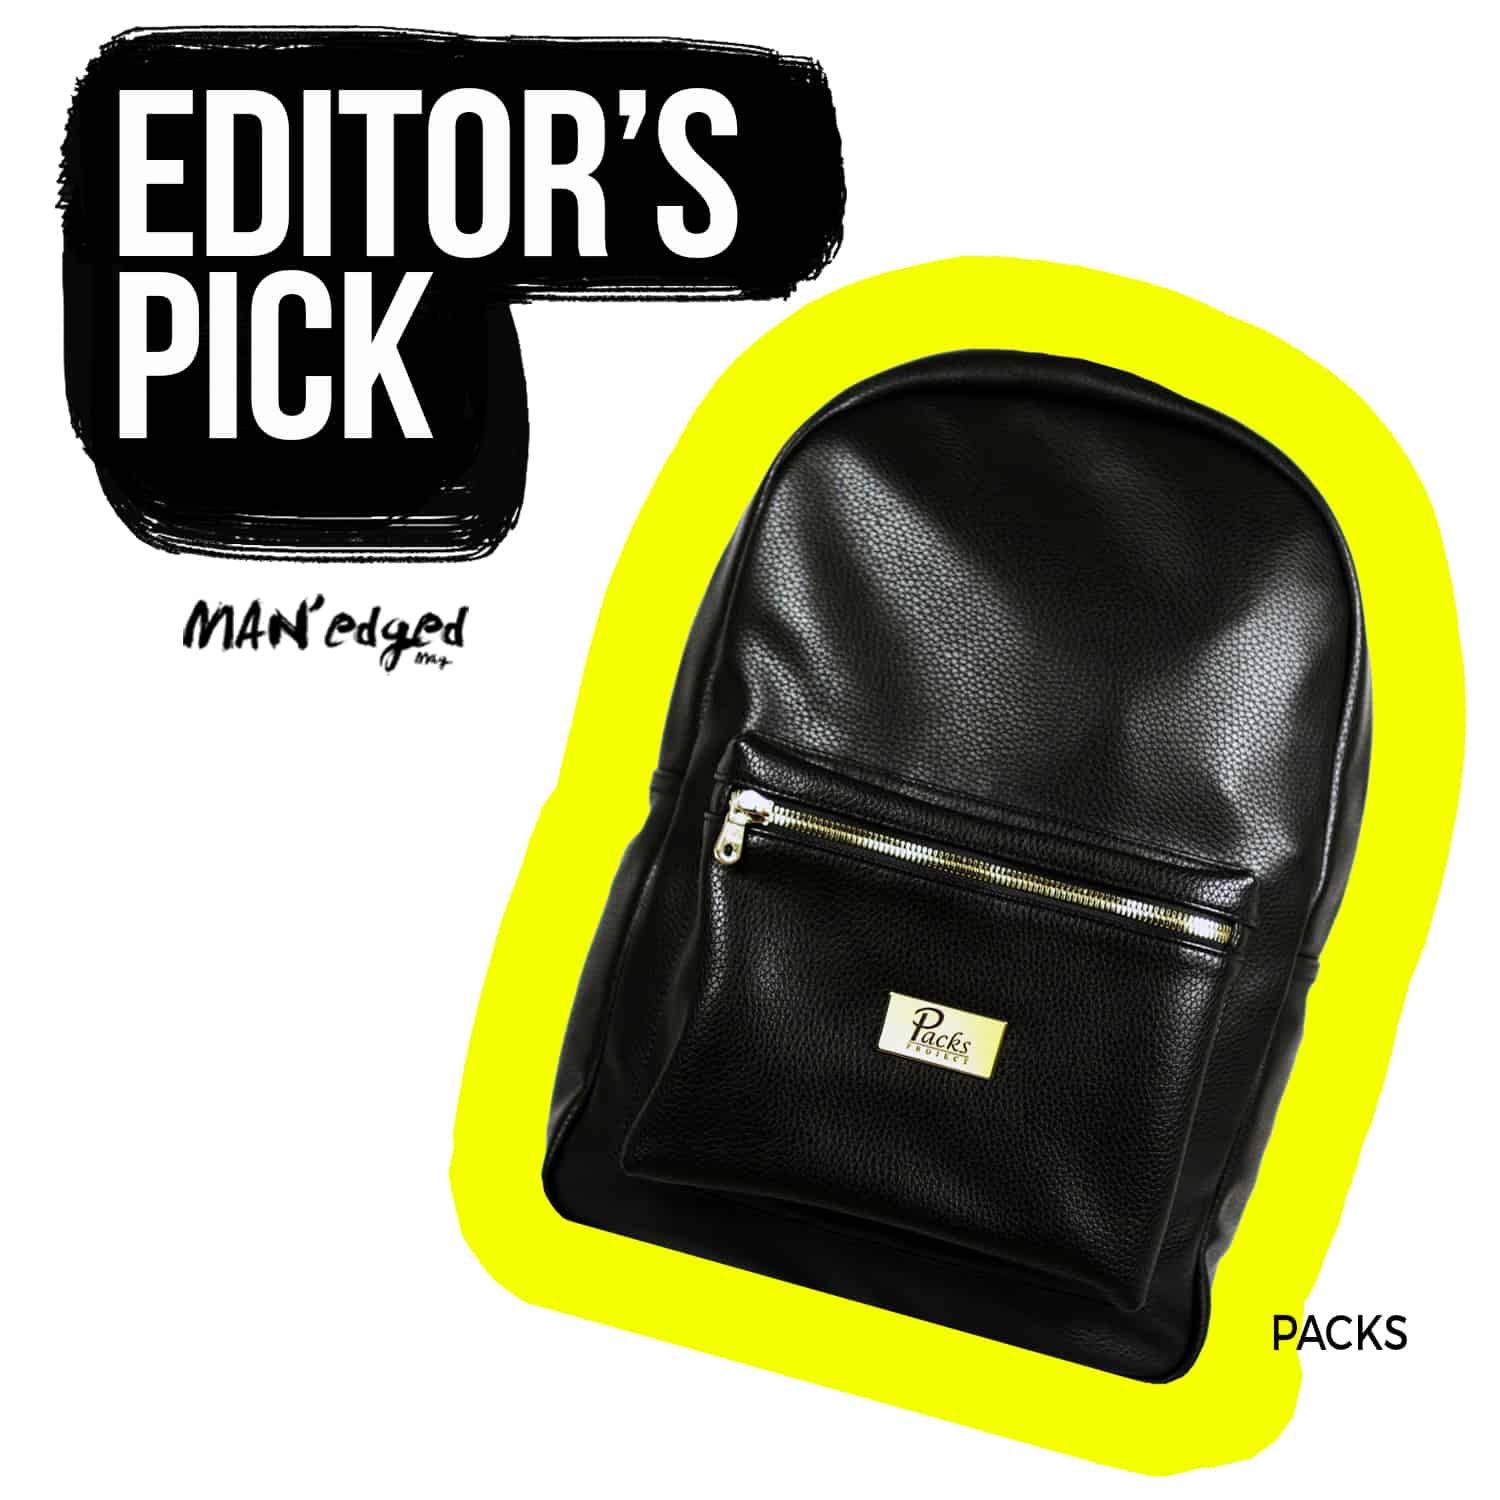 editor's pick black packs project men's bag backpack style